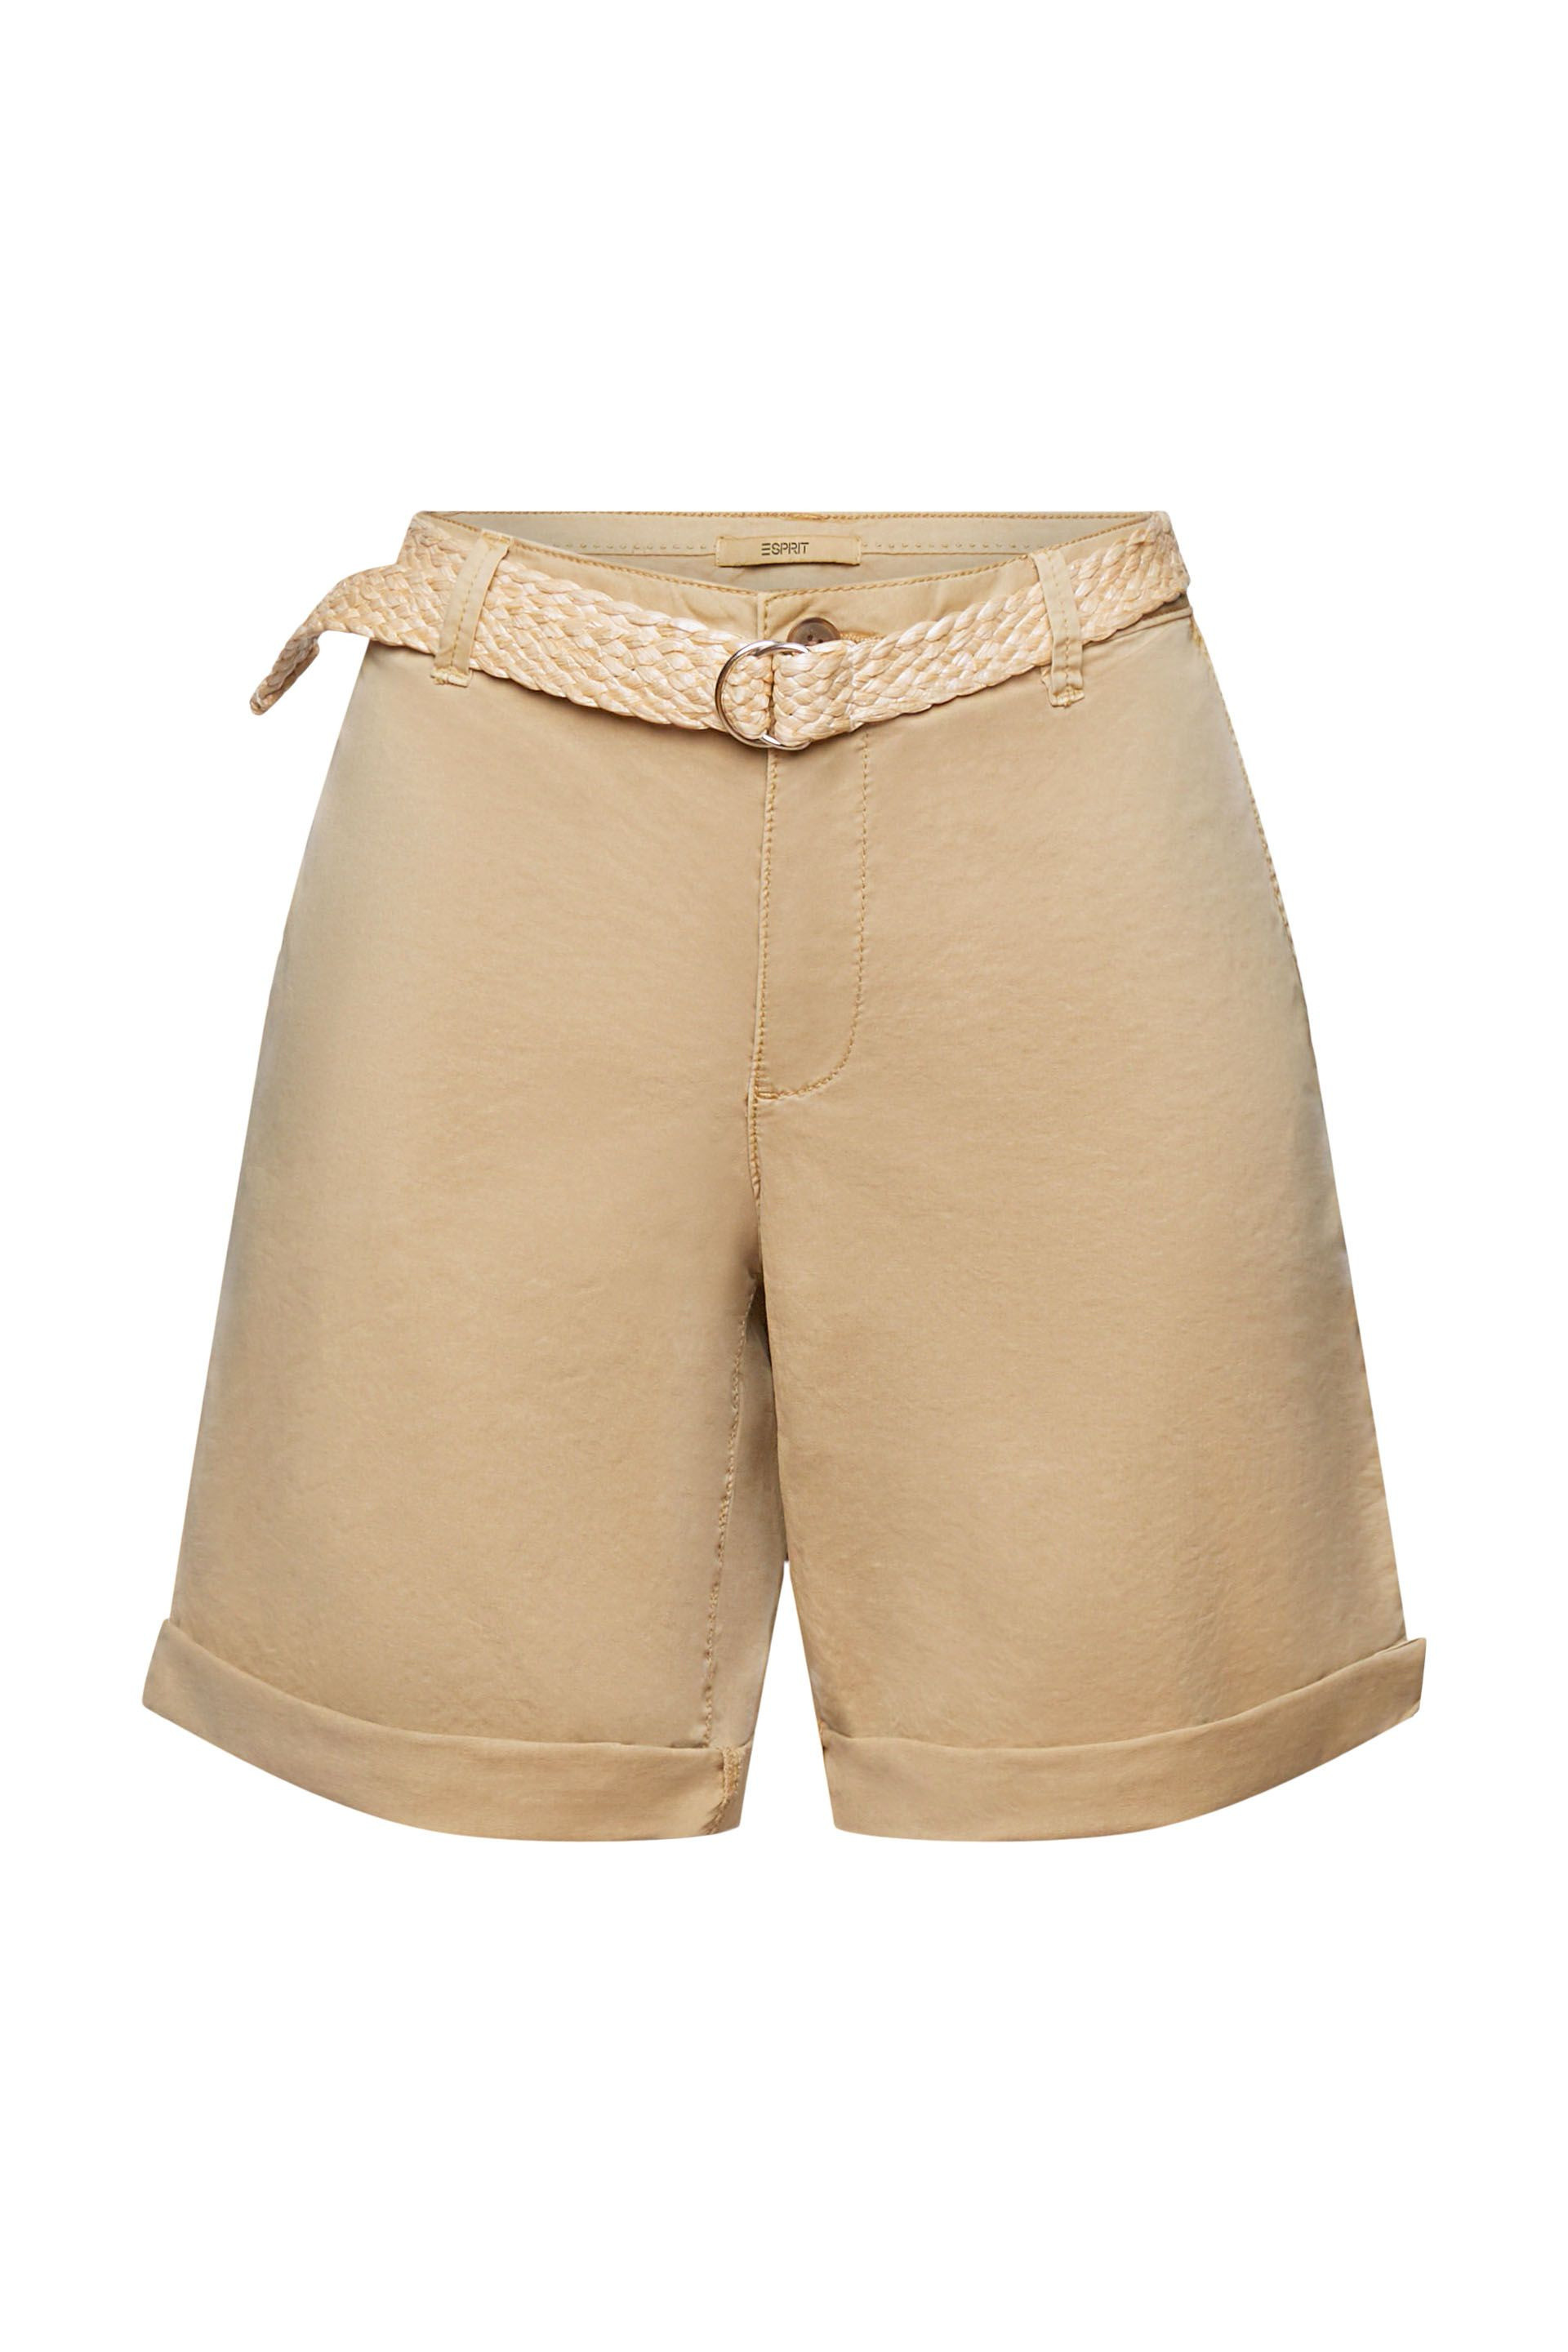 Esprit - Shorts con cintura intrecciata in rafia, Sabbia, large image number 0